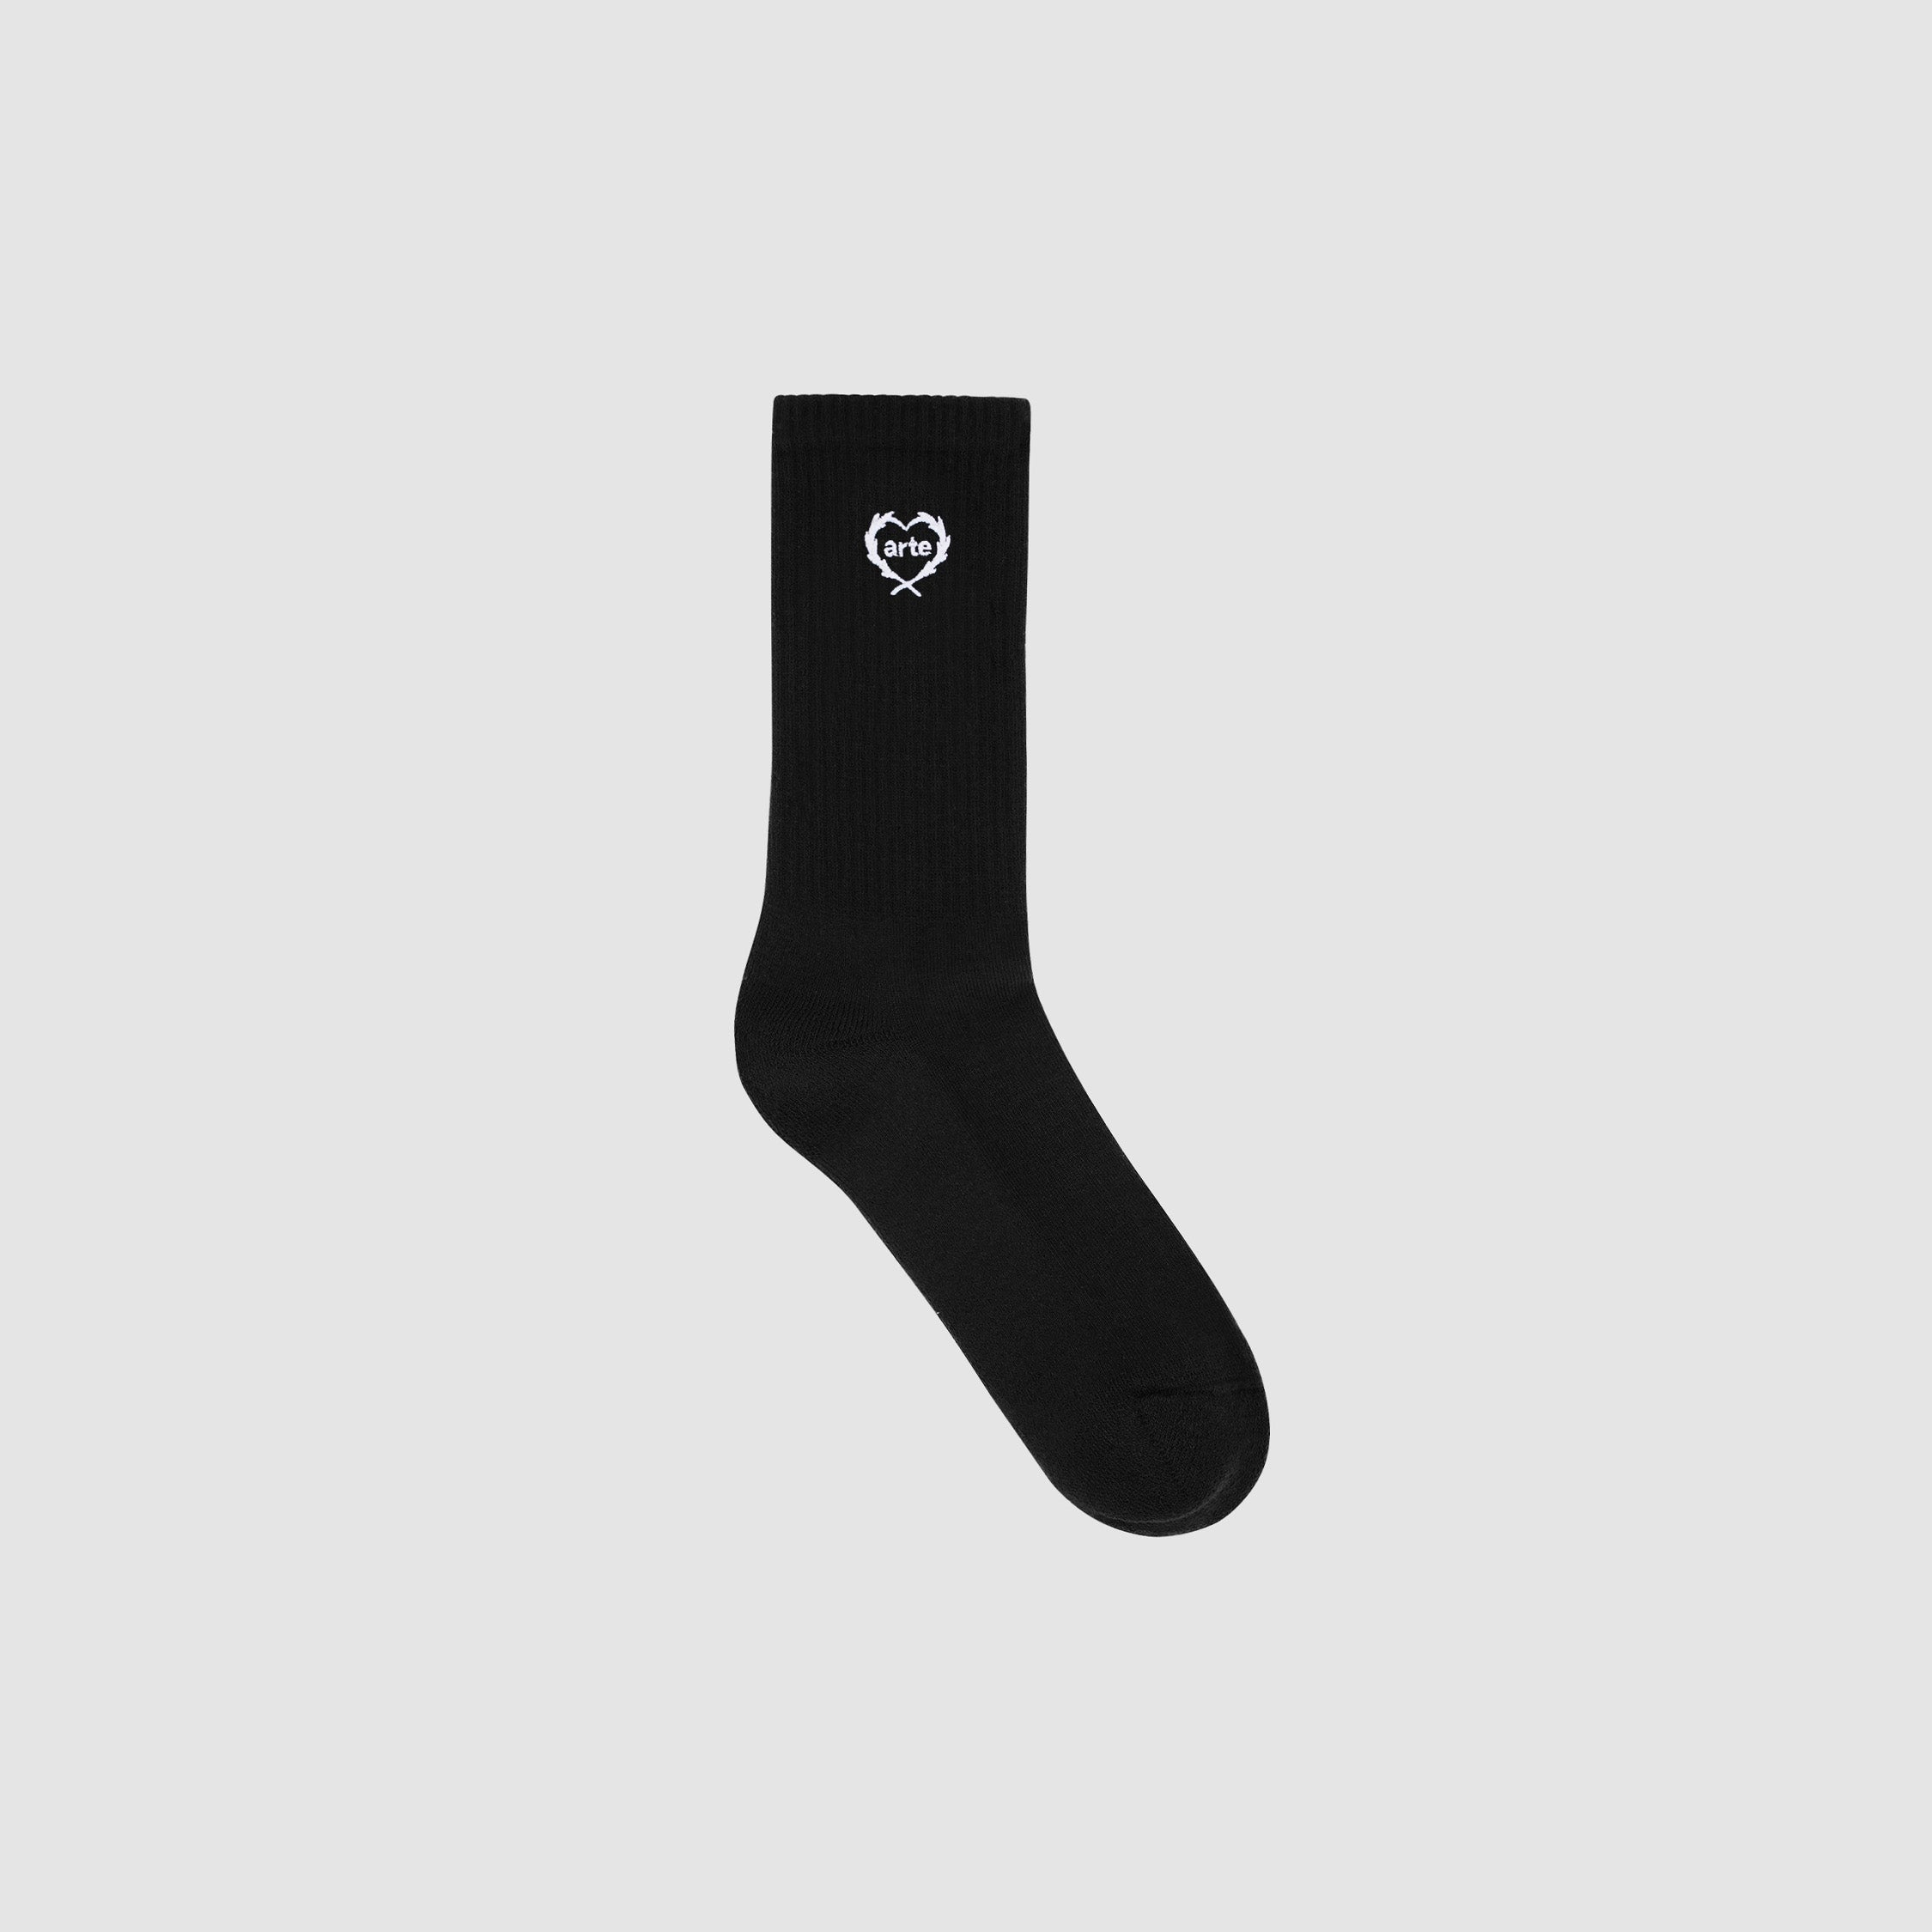 Arte Small Heart Socks - Black